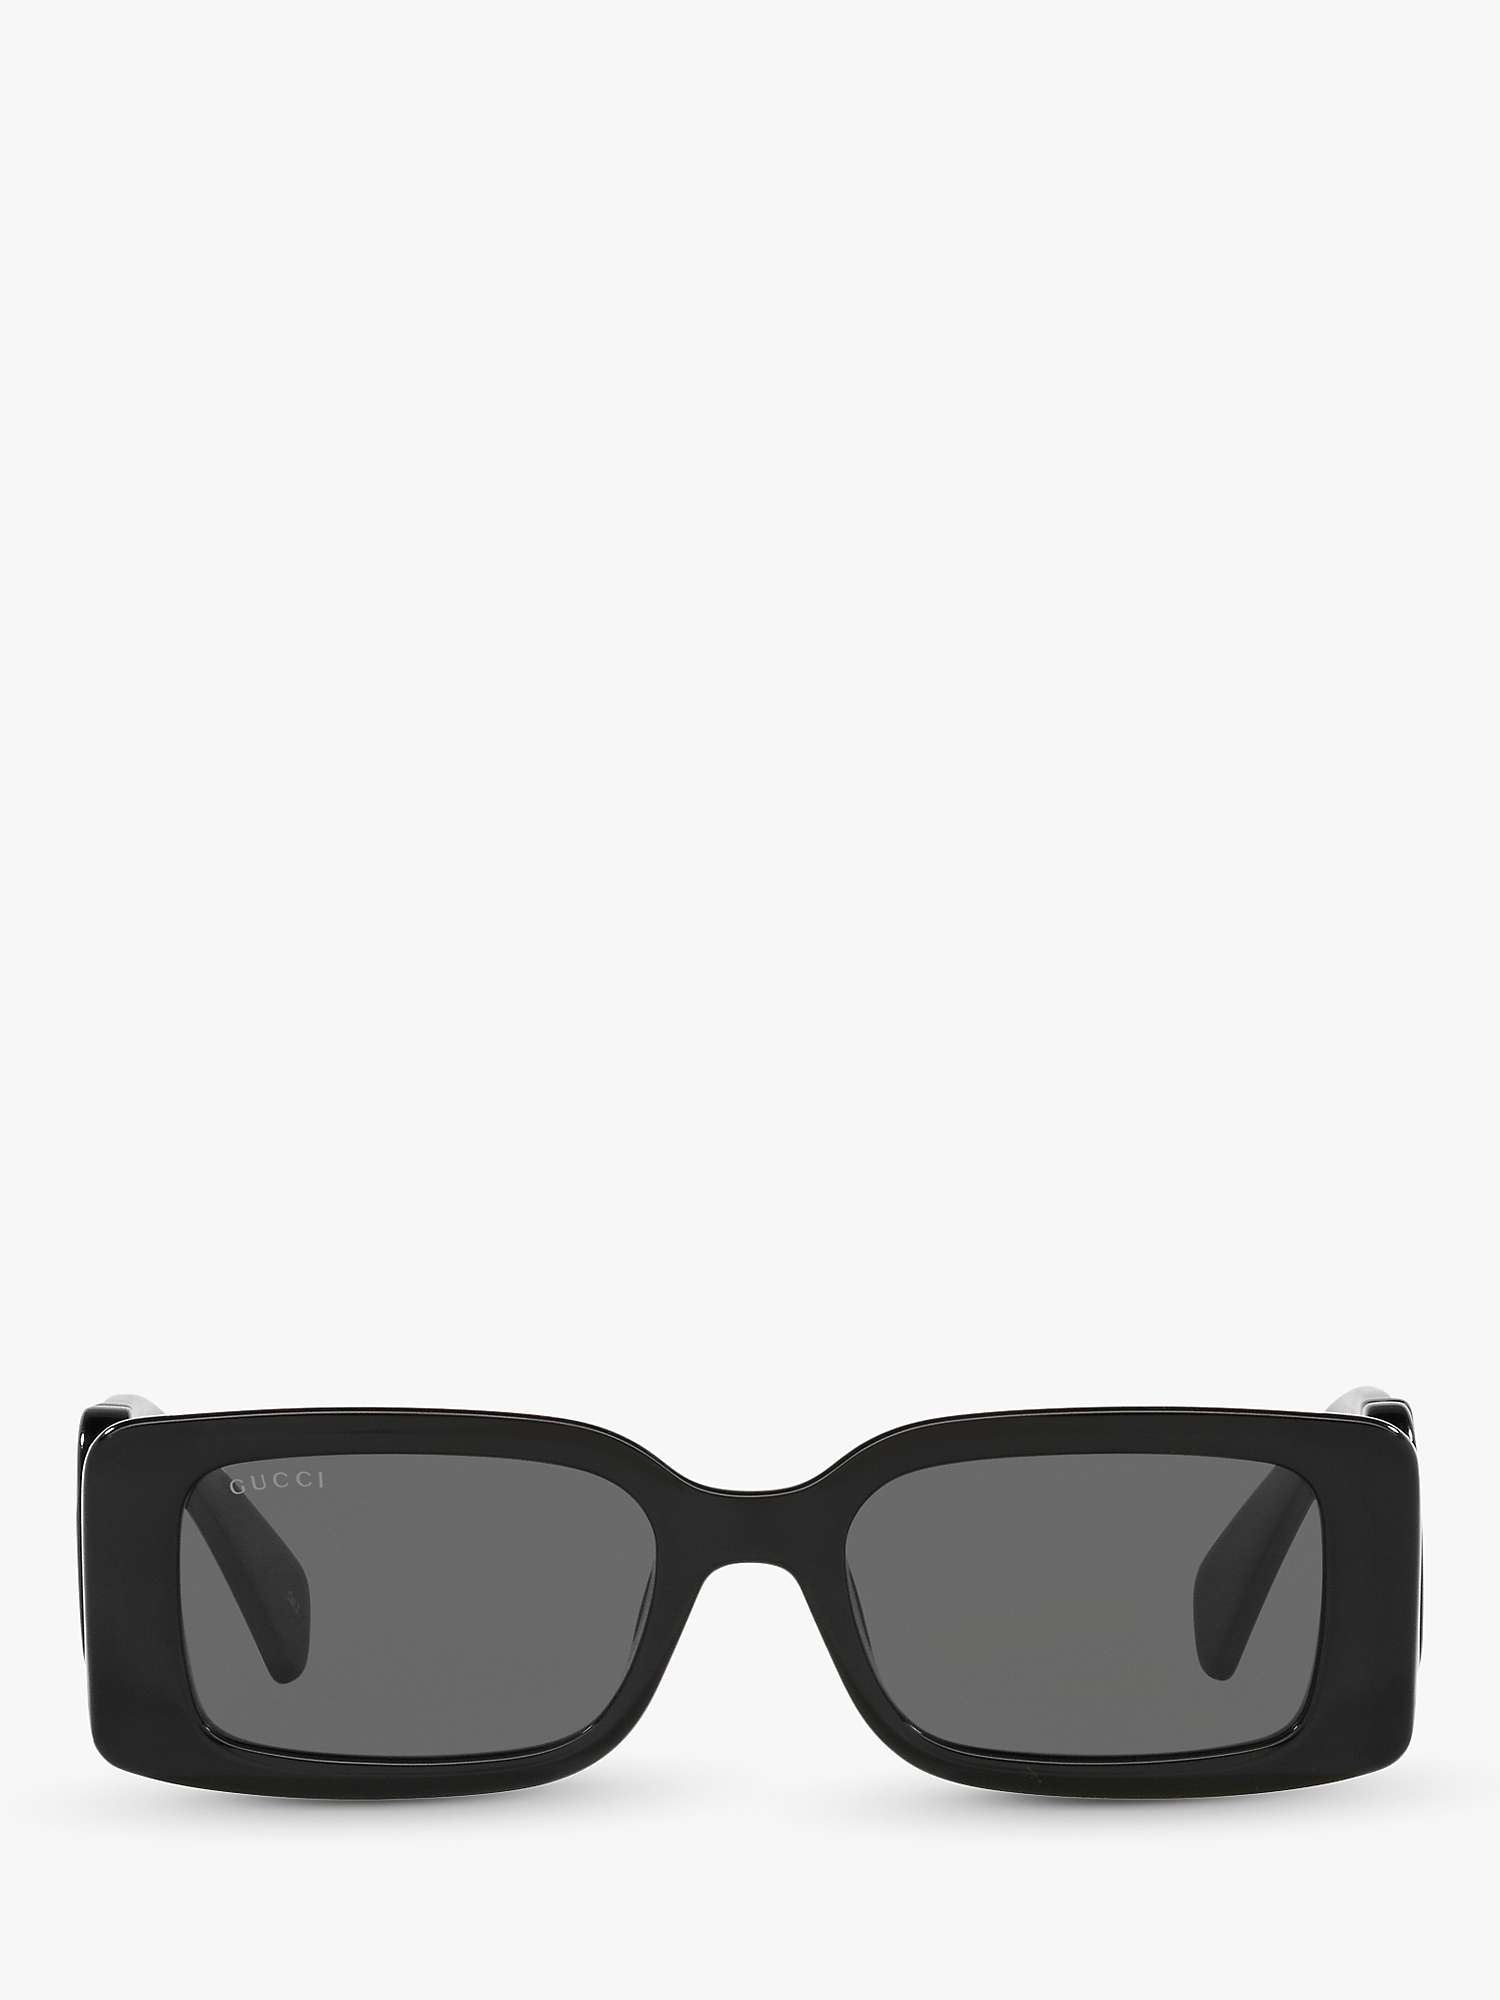 Buy Gucci GG1325S Women's Rectangular Sunglasses, Black/Grey Online at johnlewis.com